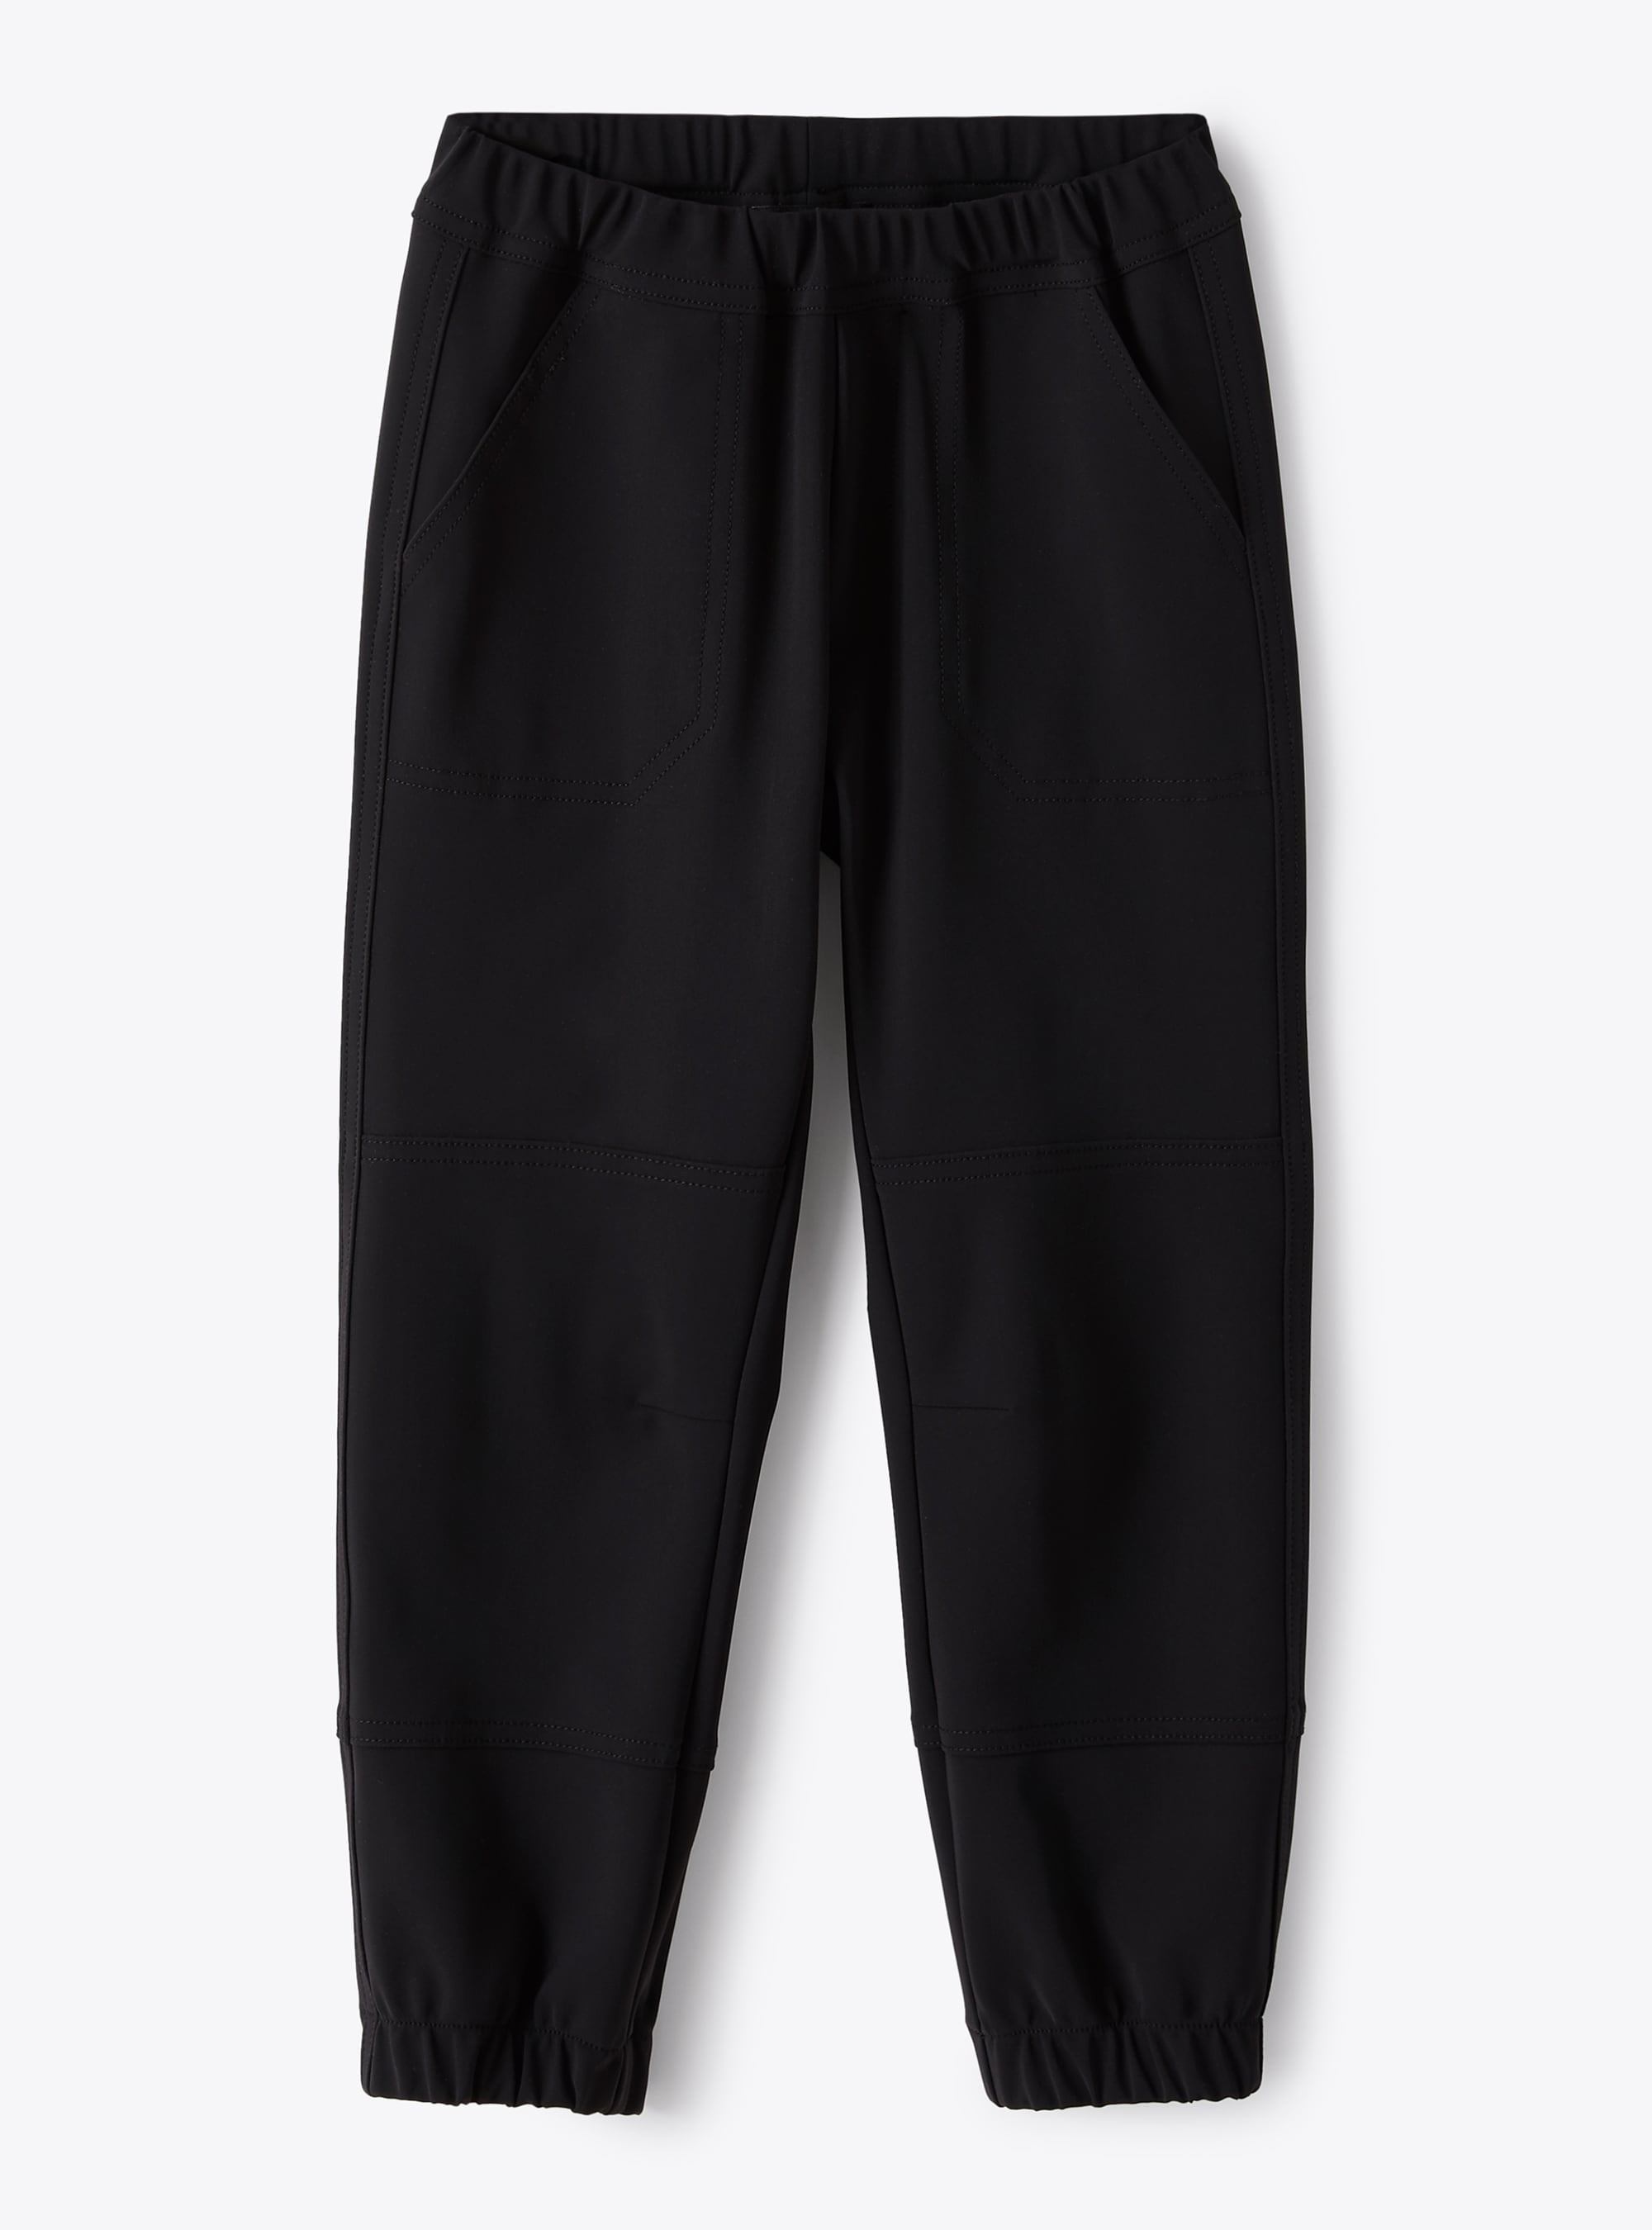 Joggers in black Sensitive® Fabrics material - Trousers - Il Gufo